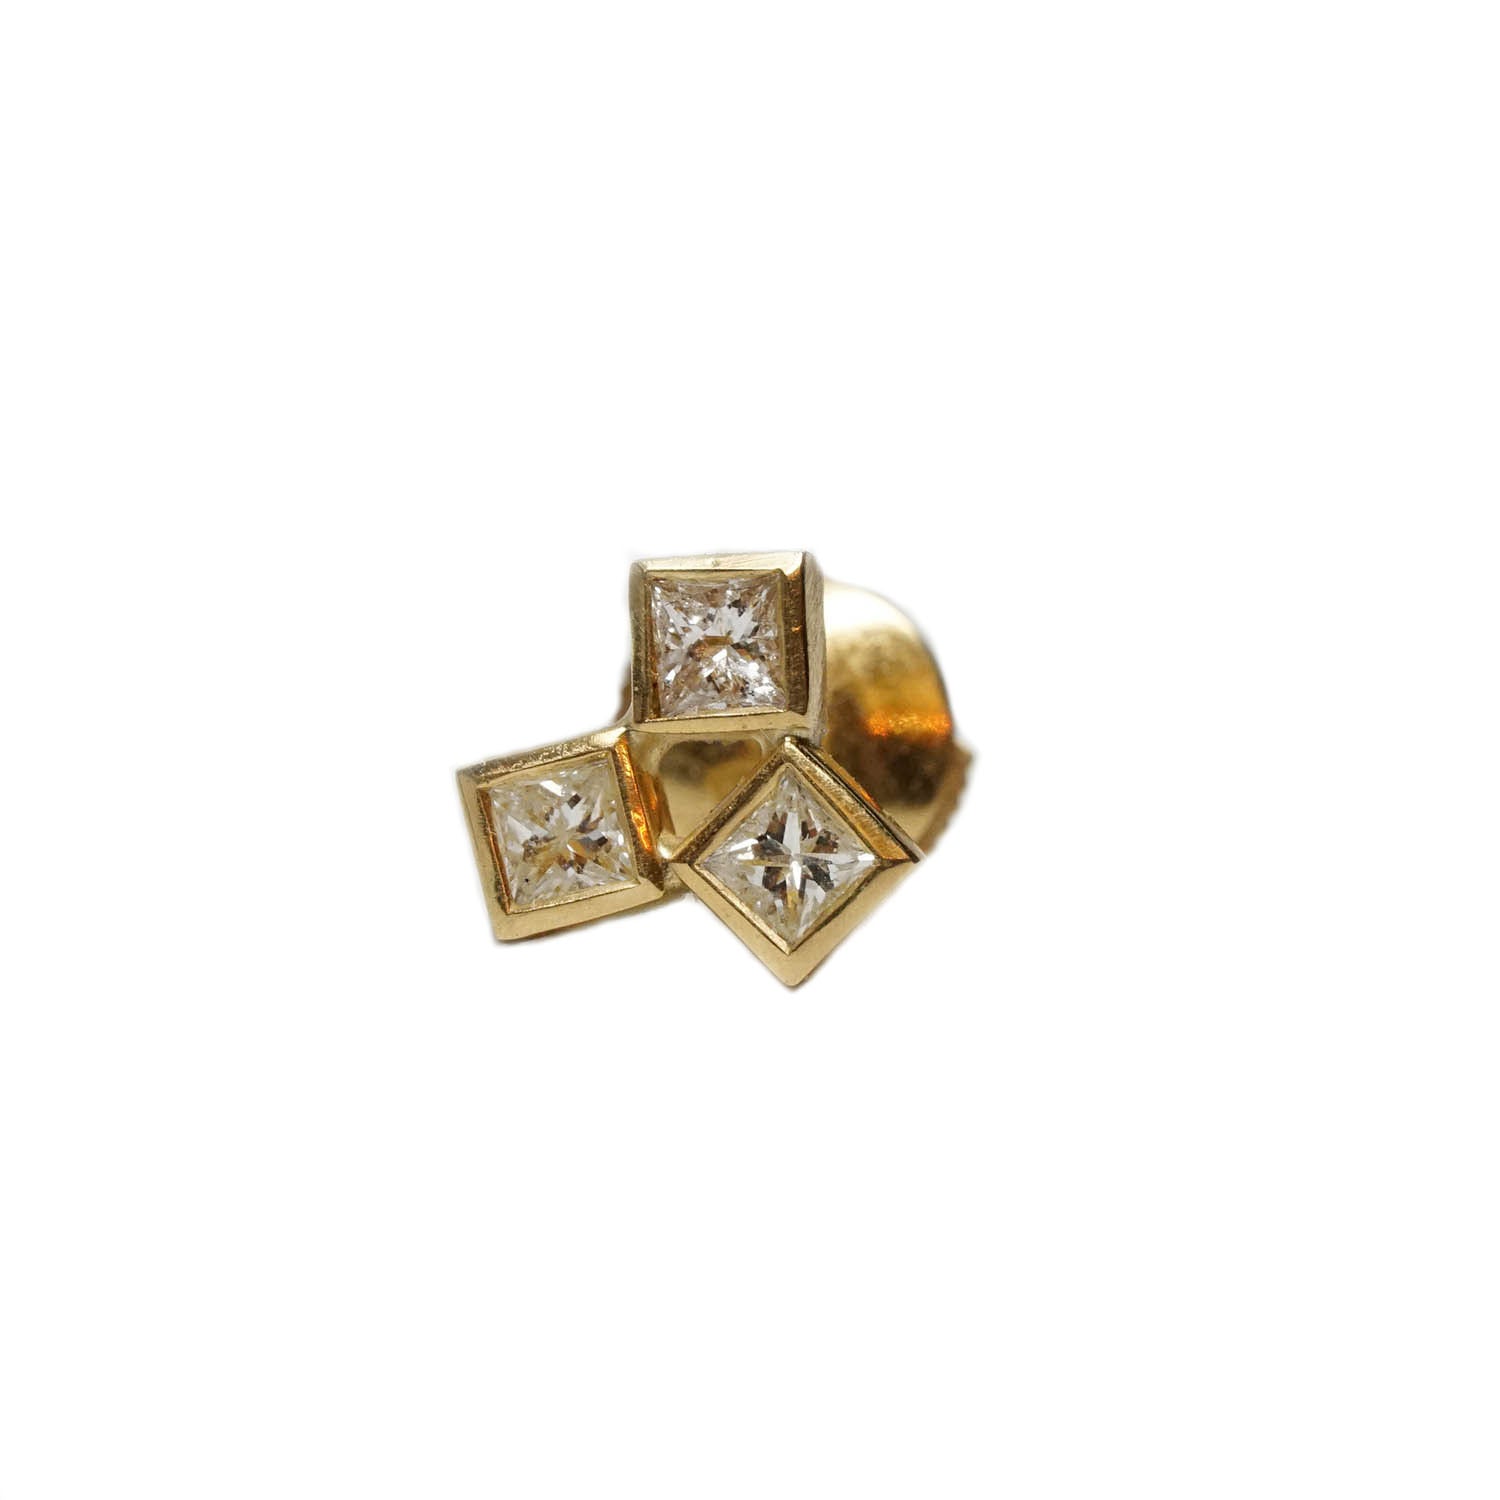 18k yellow gold - VS 3 Princess Diamond Unique Cluster Earrings